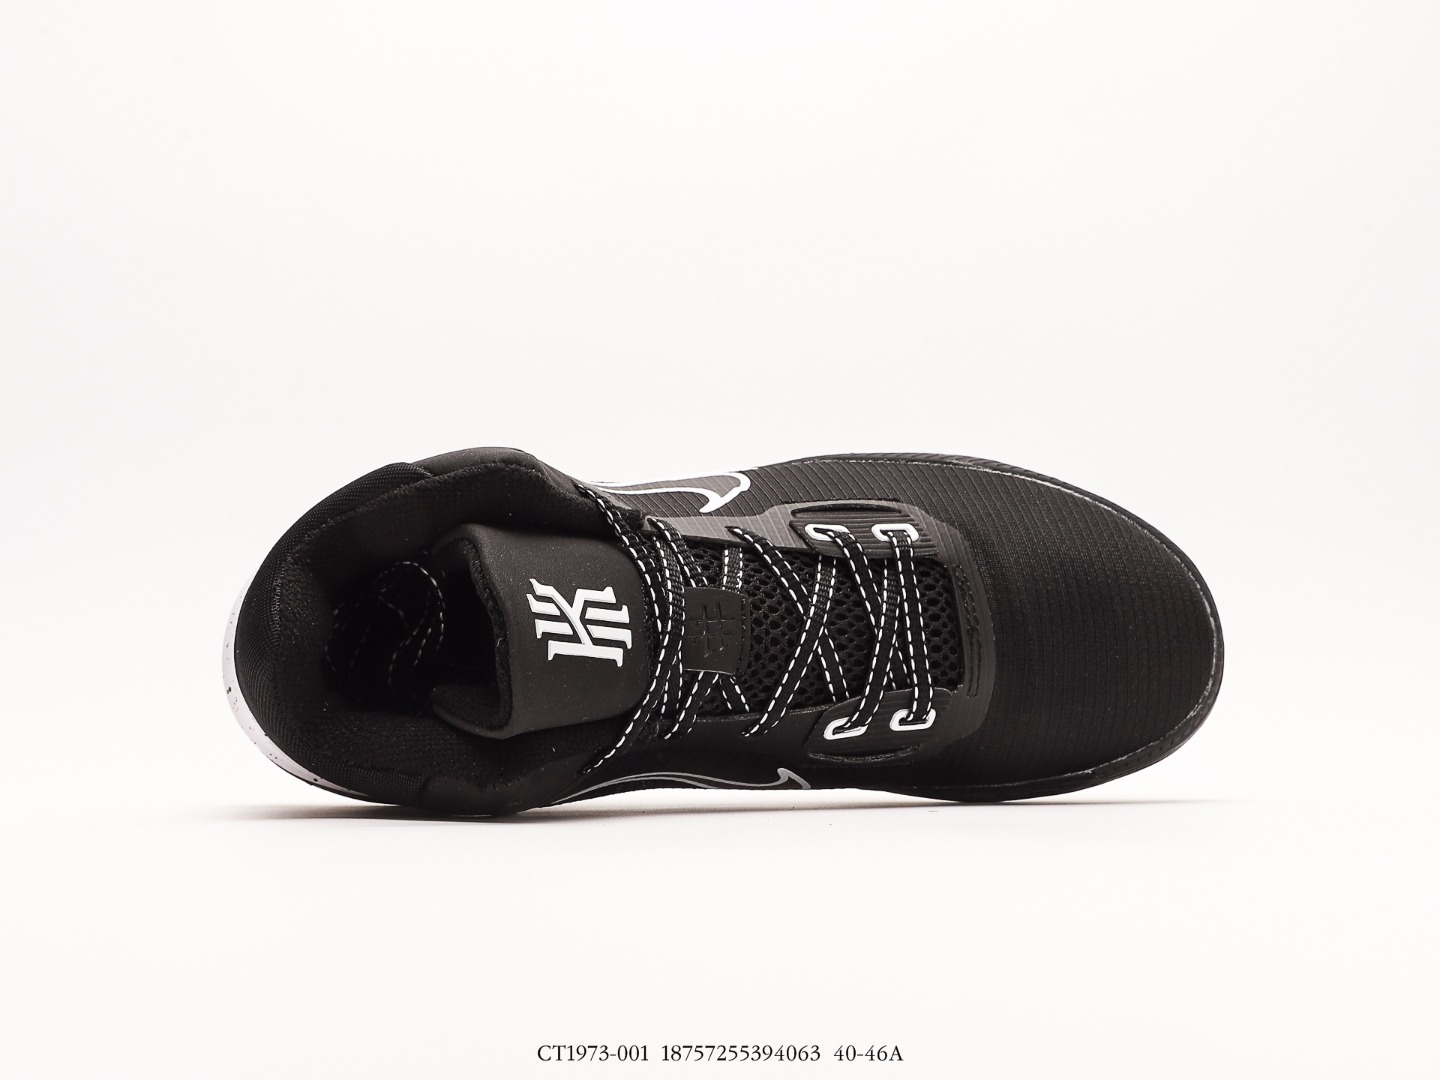 Nike Kyrie Flytrap 4 noir blanc _ ct1973-001